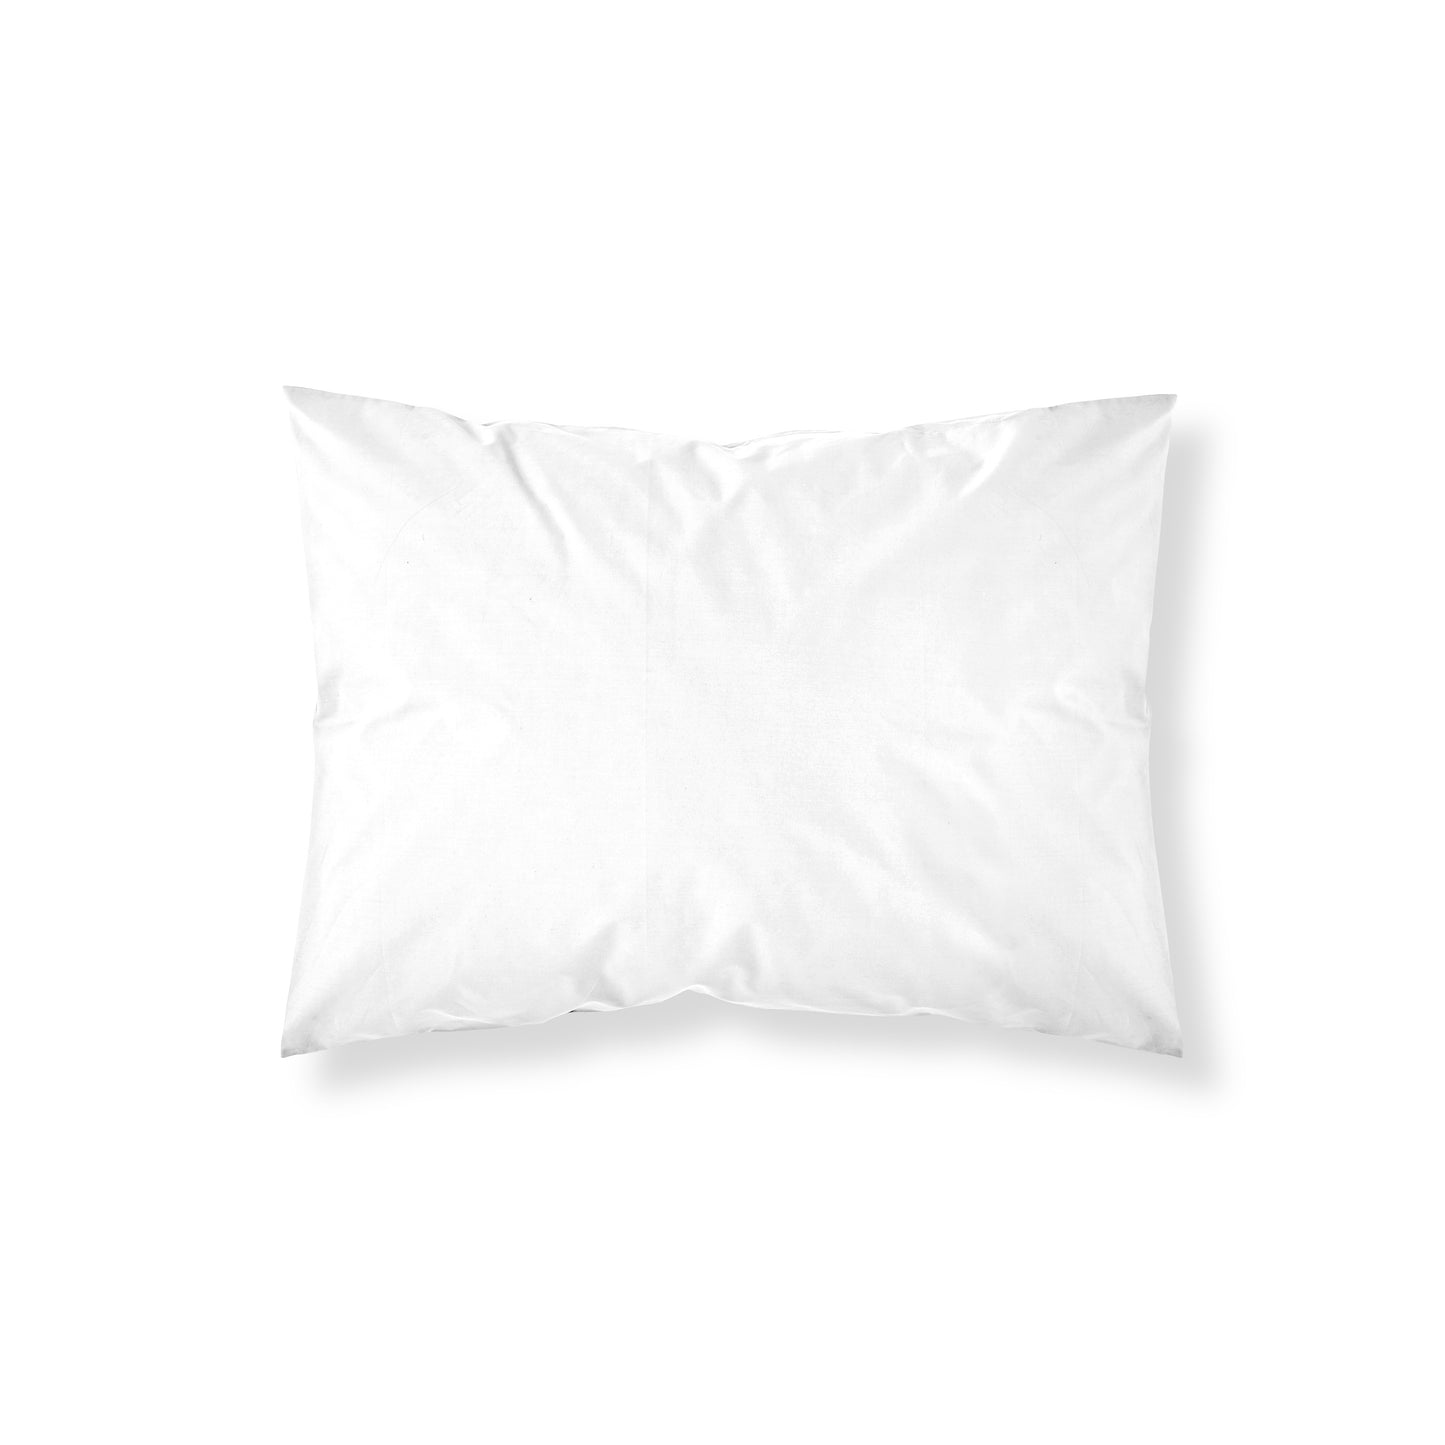 Taie d'oreiller blanche 100% coton 30x50 cm